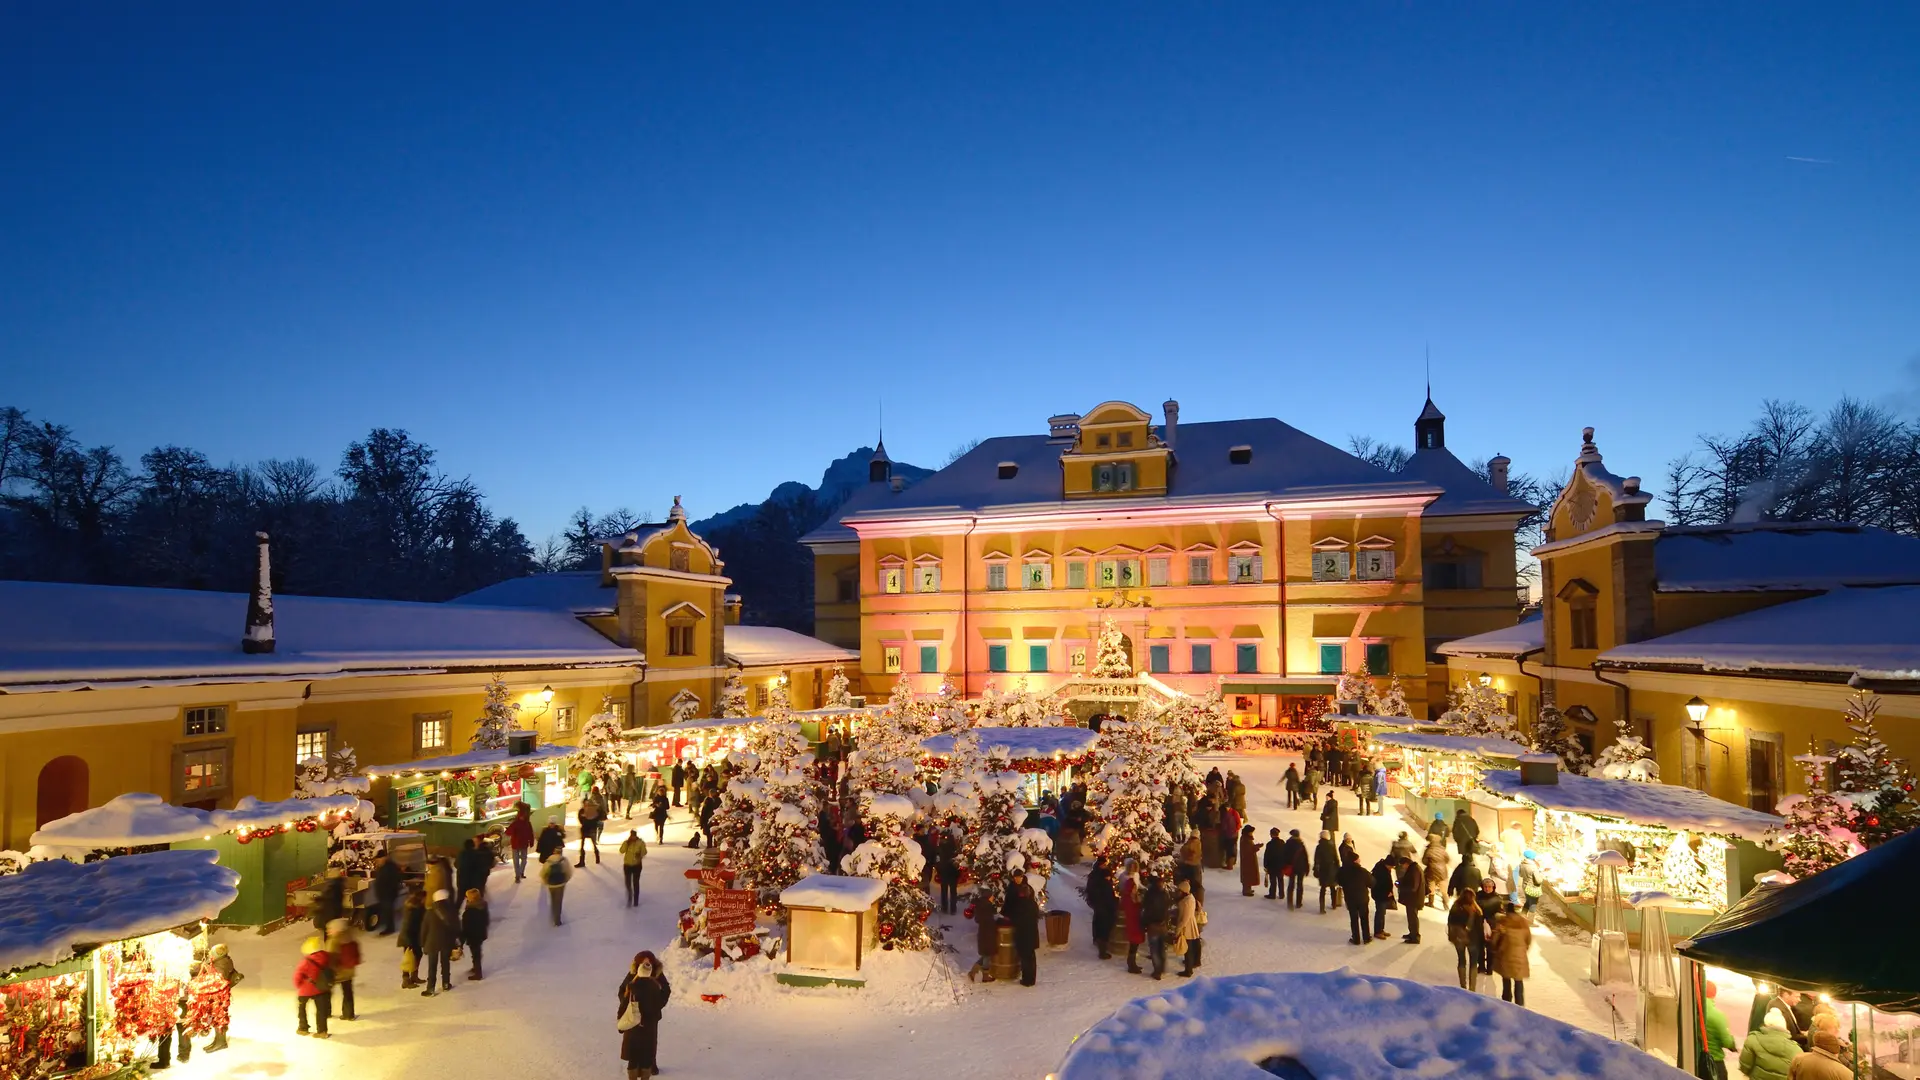 Dom and Residenzplatz christmas market in Salzburg, Austria